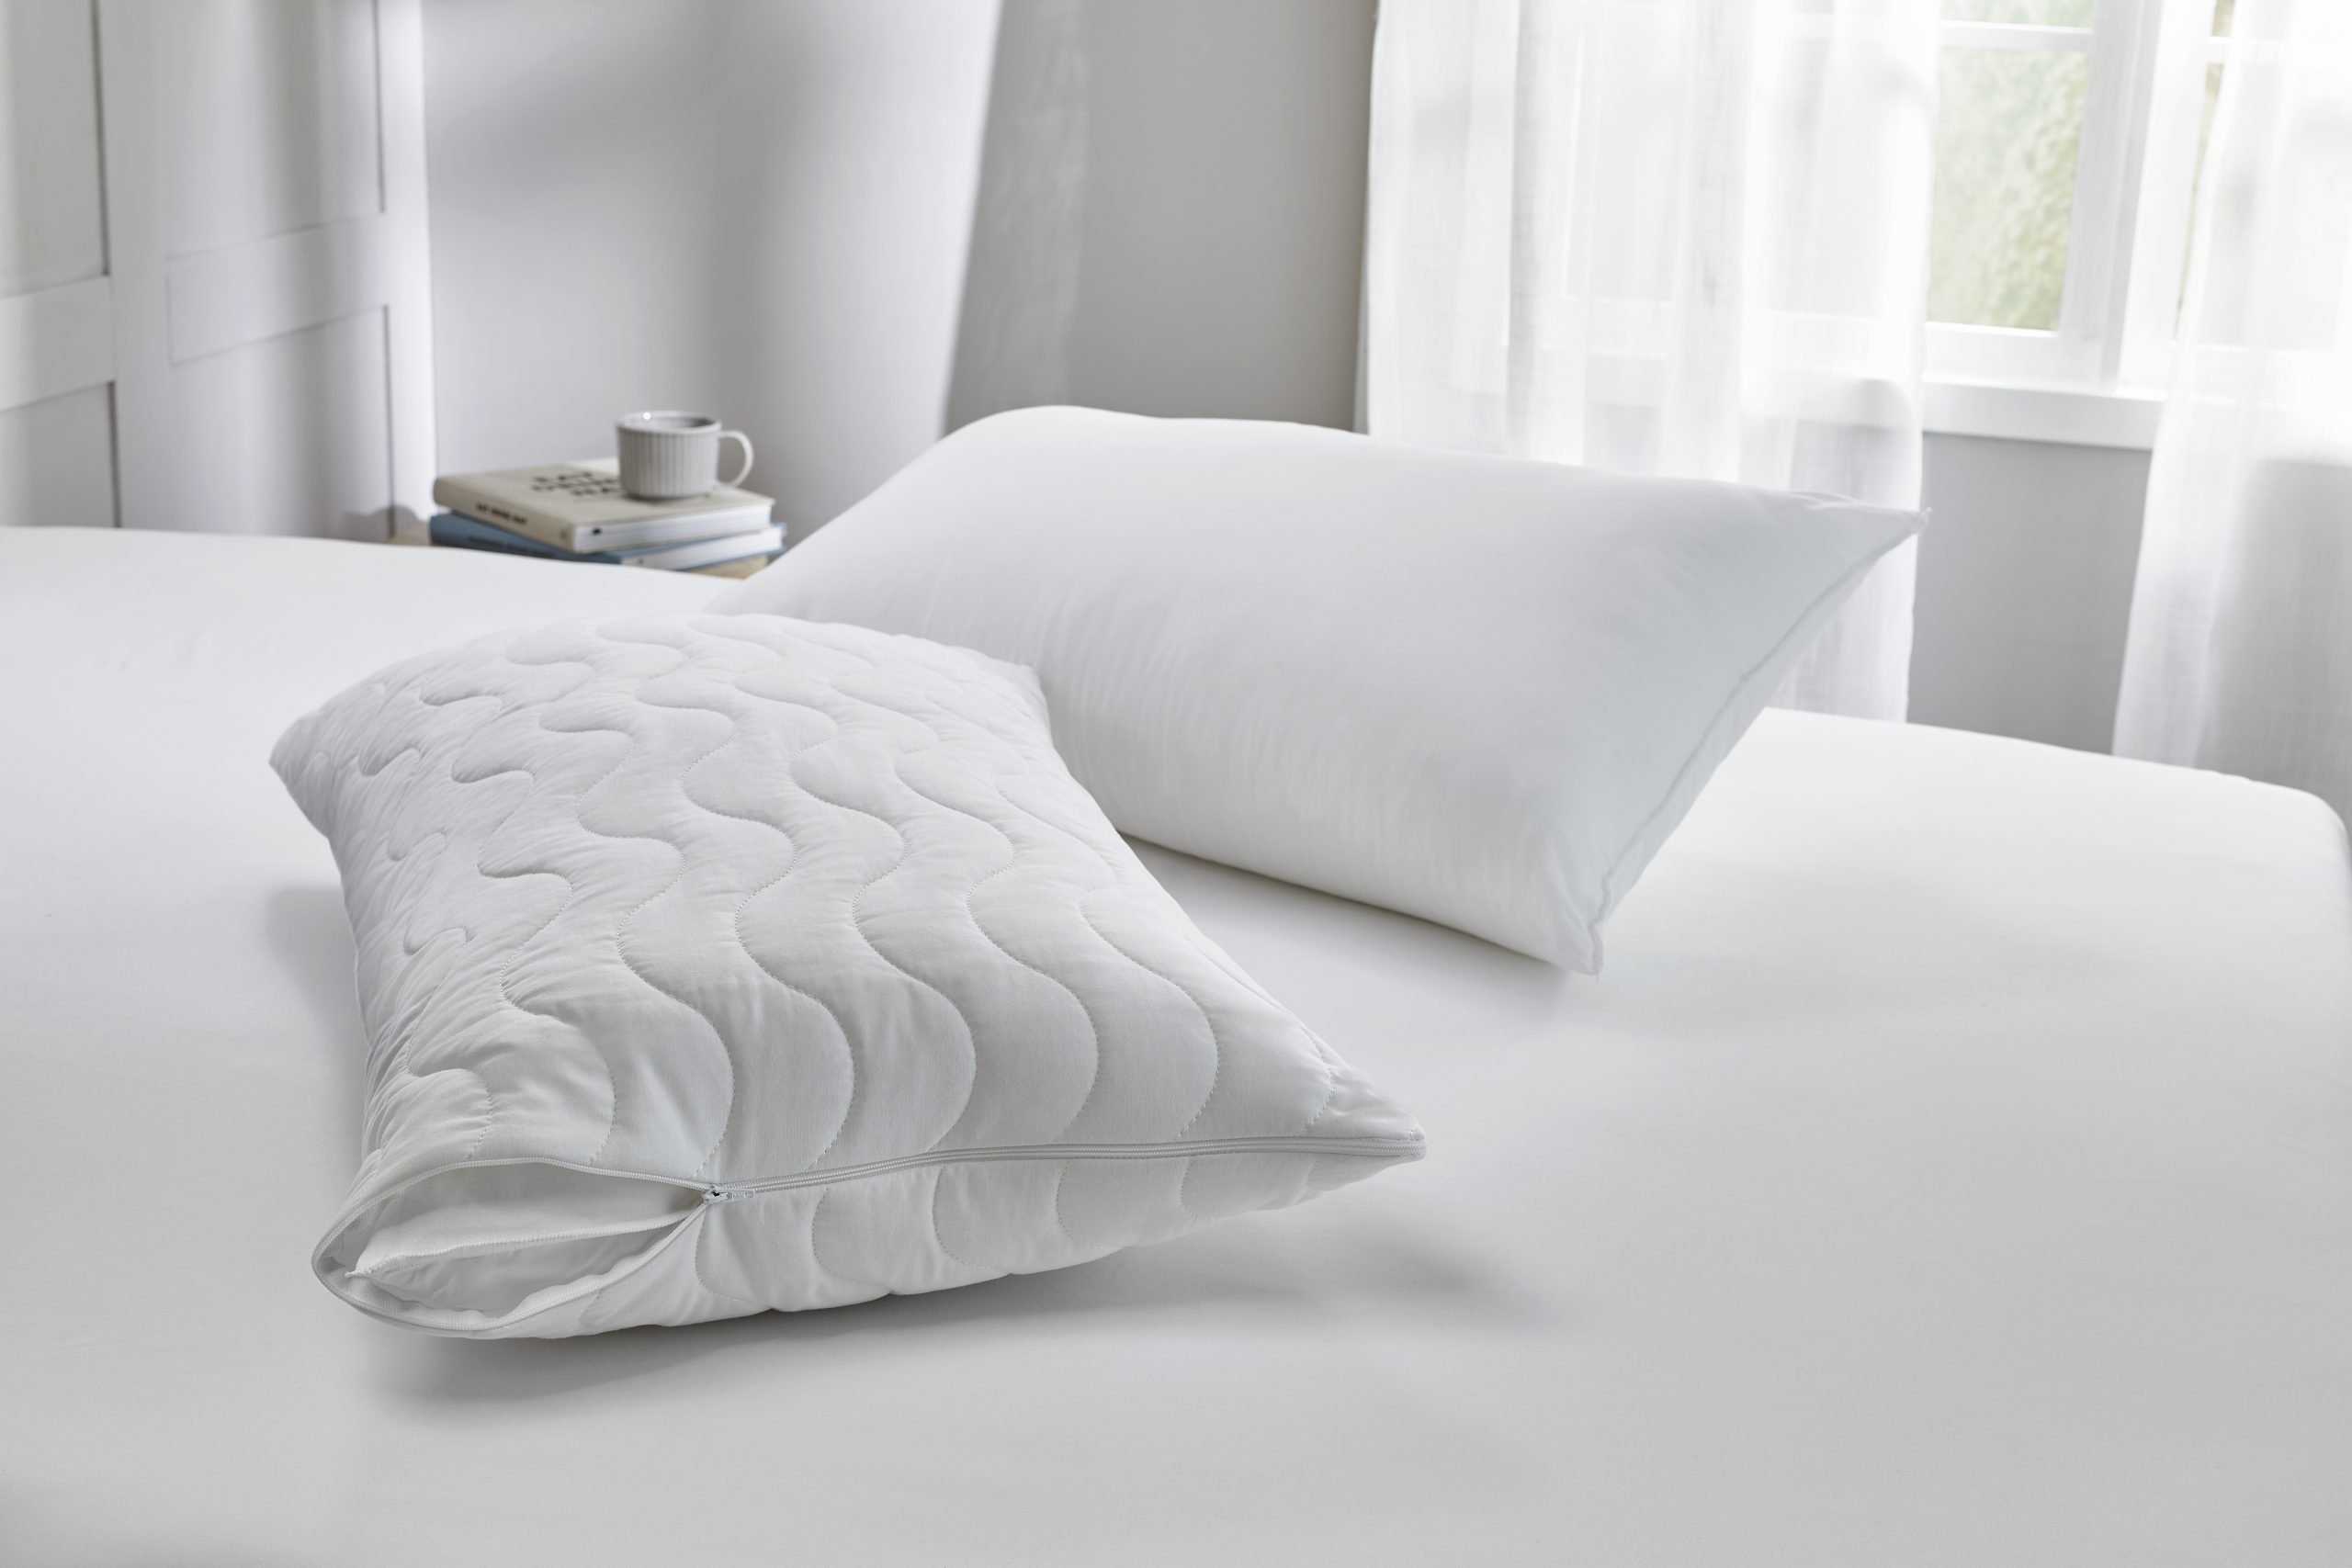 Premier Inn Luxury Pillows - Premier Inn at home